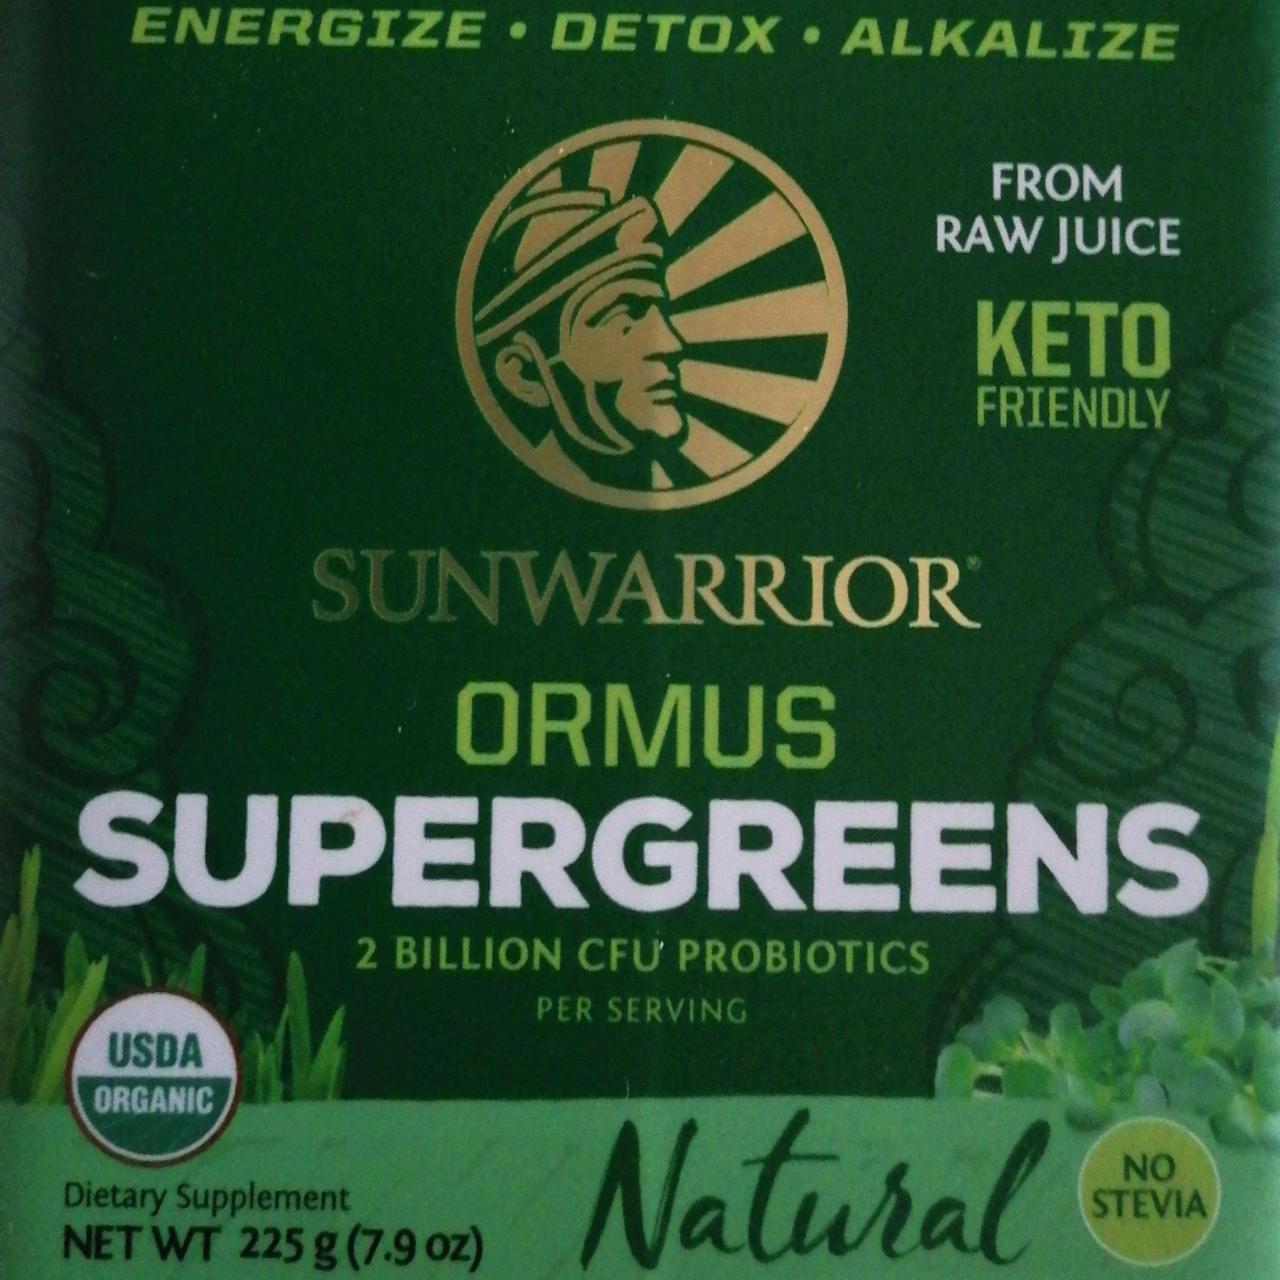 Képek - Ormus supergreens natural Sunwarrior